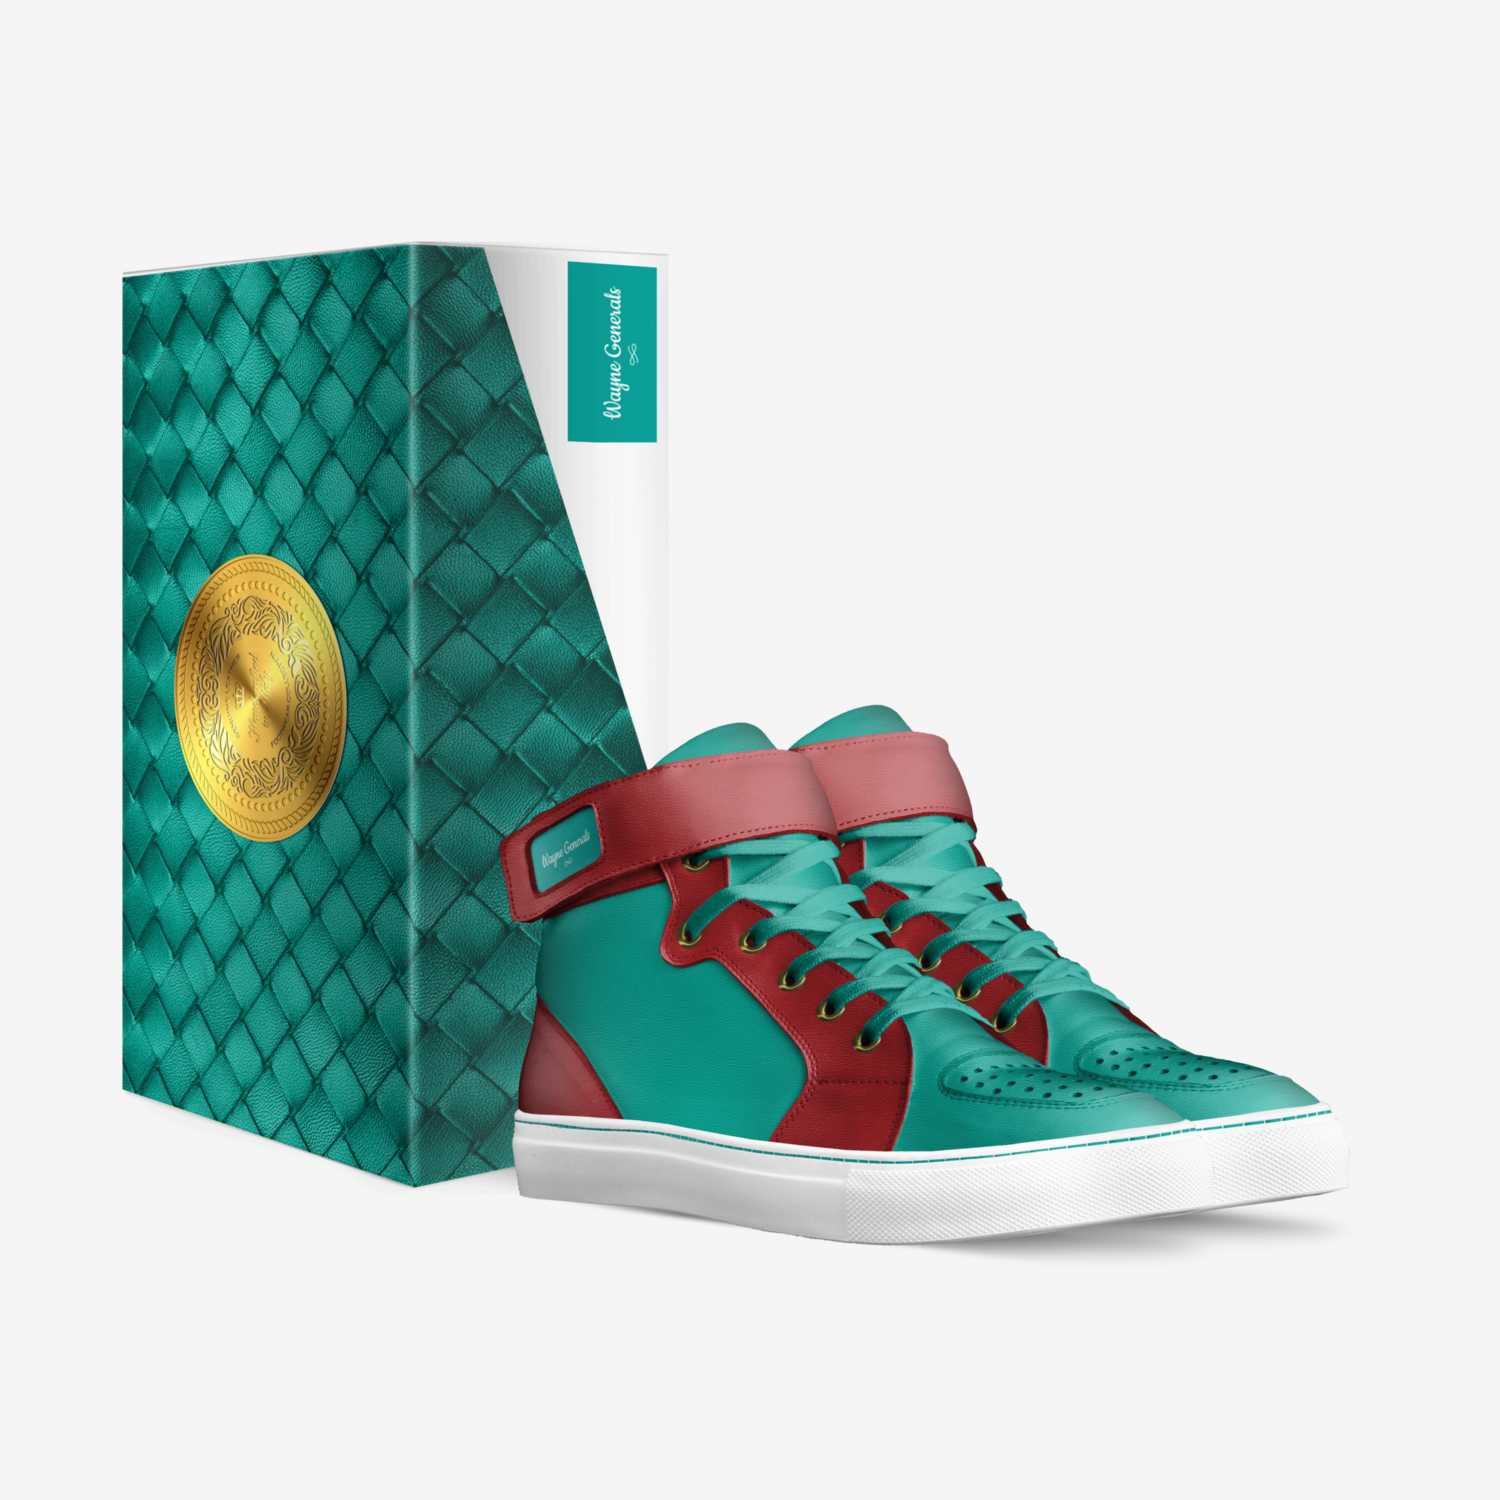 Wayne Generals custom made in Italy shoes by Ayrehaud Jones | Box view